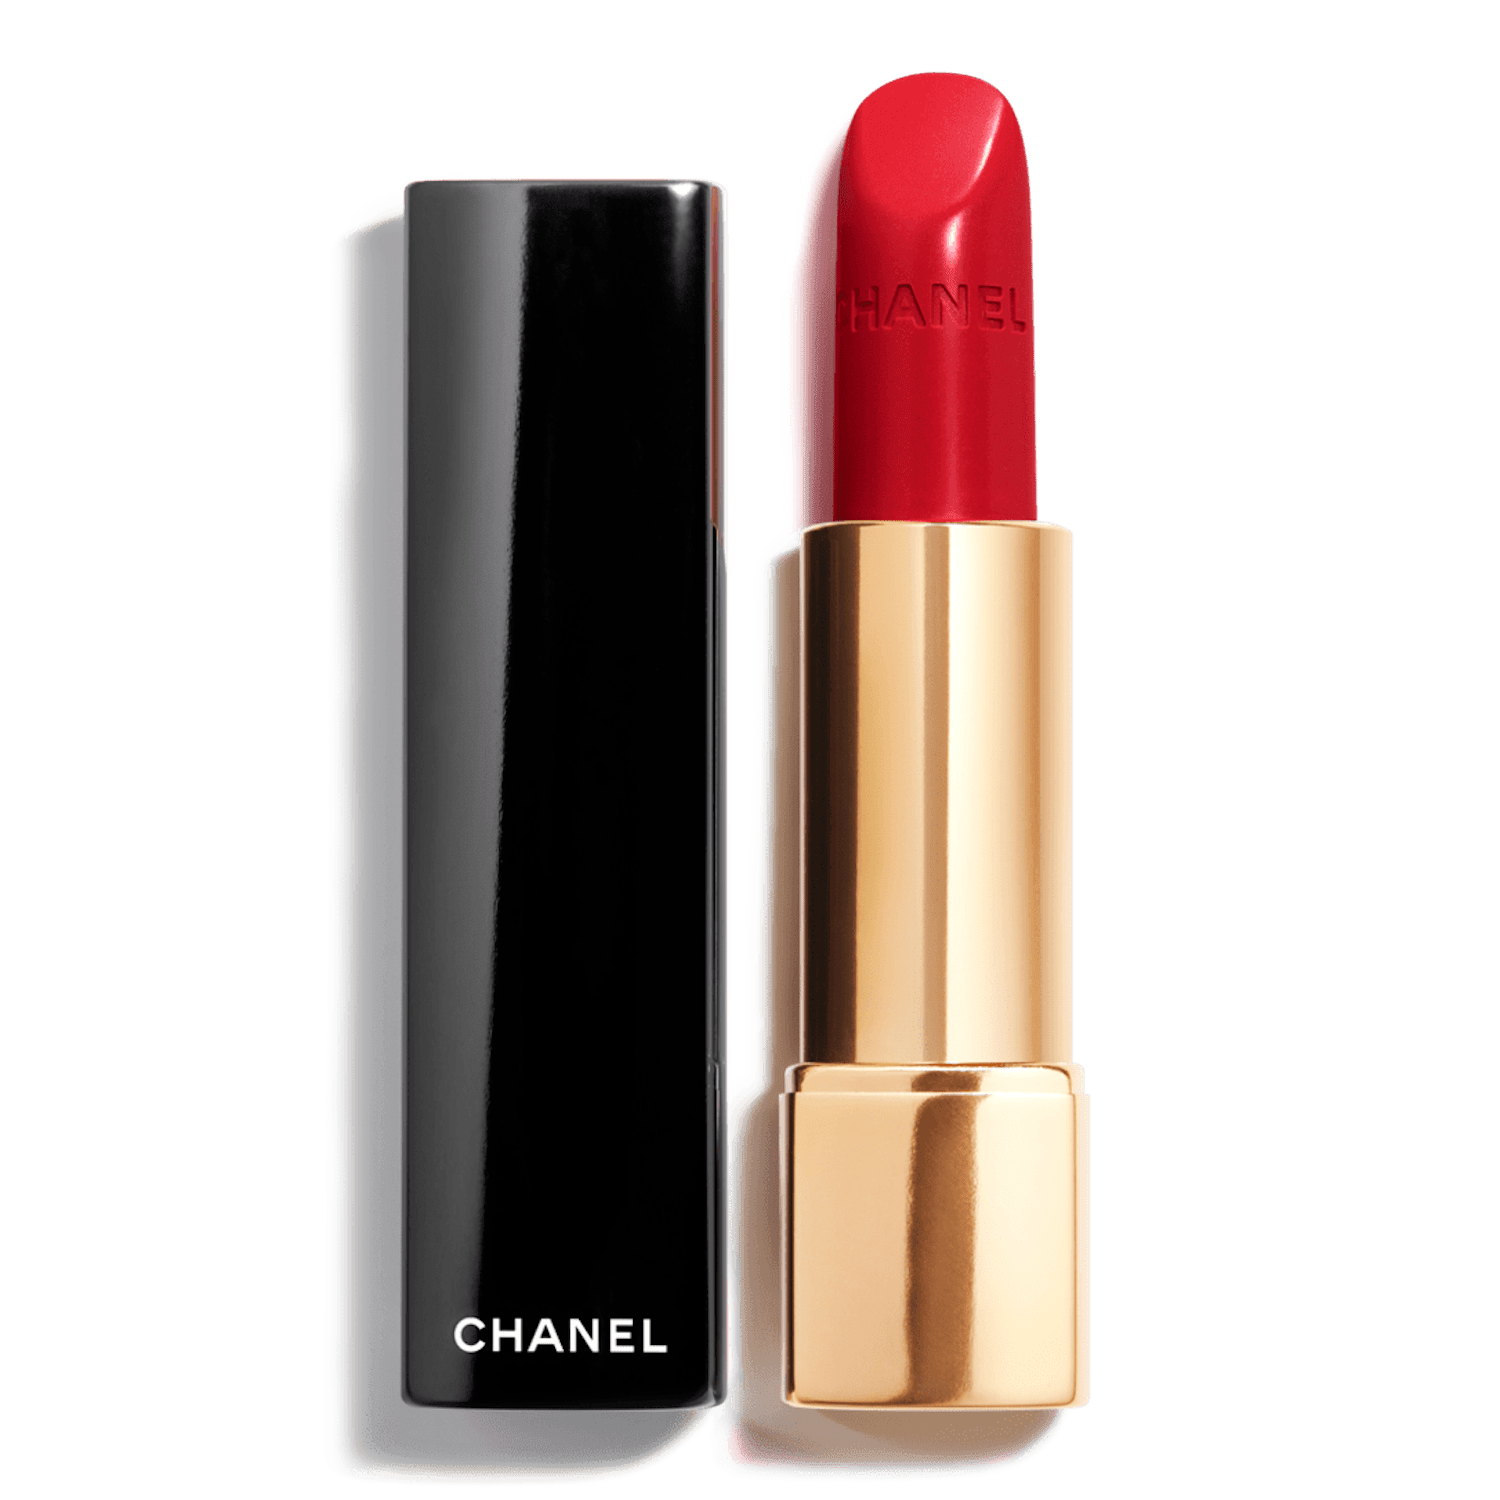 7 Red Lipsticks Celebrity Makeup Artists Swear By